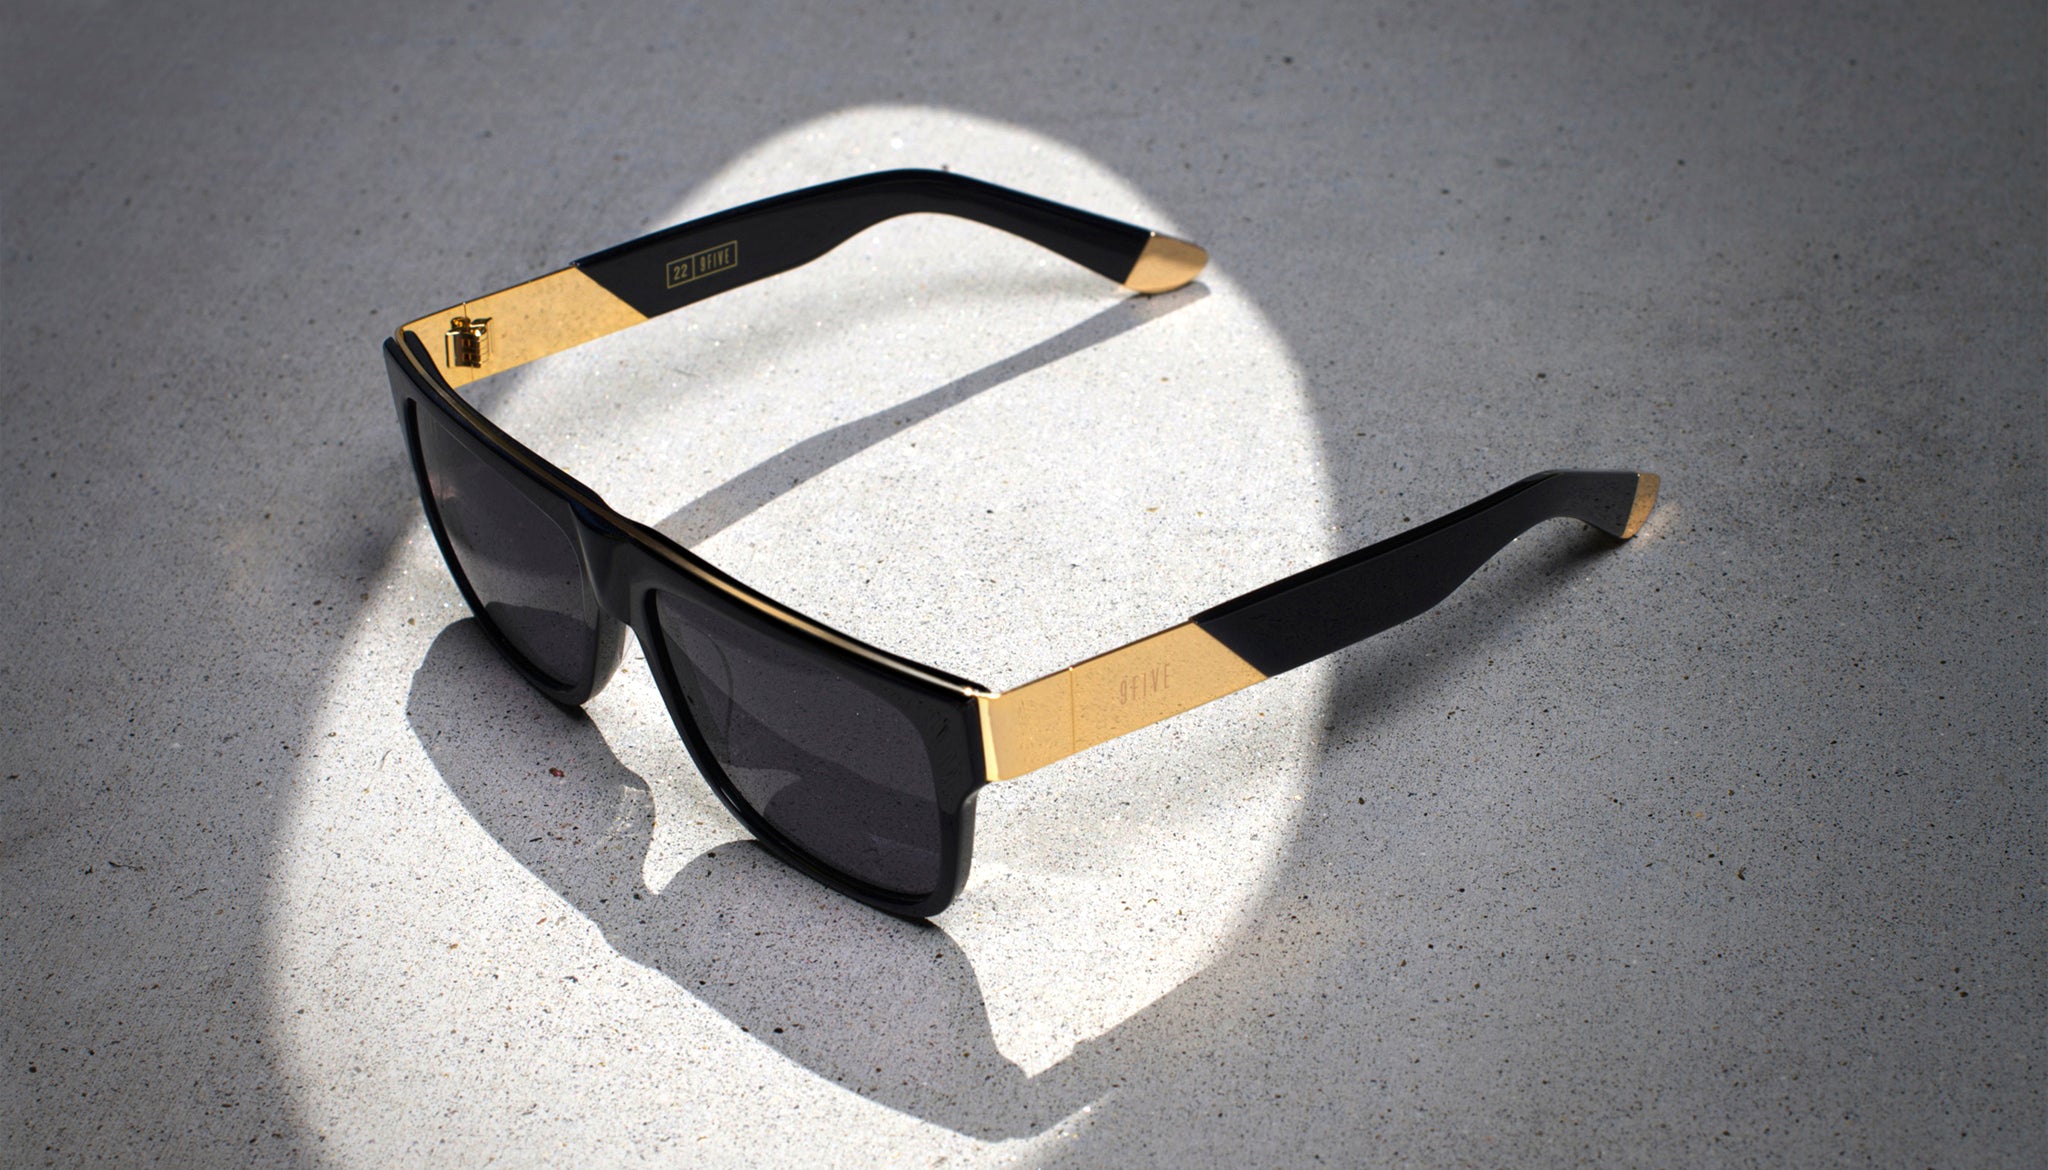 9Five Apex Black & 24K Gold Sunglasses Yellow